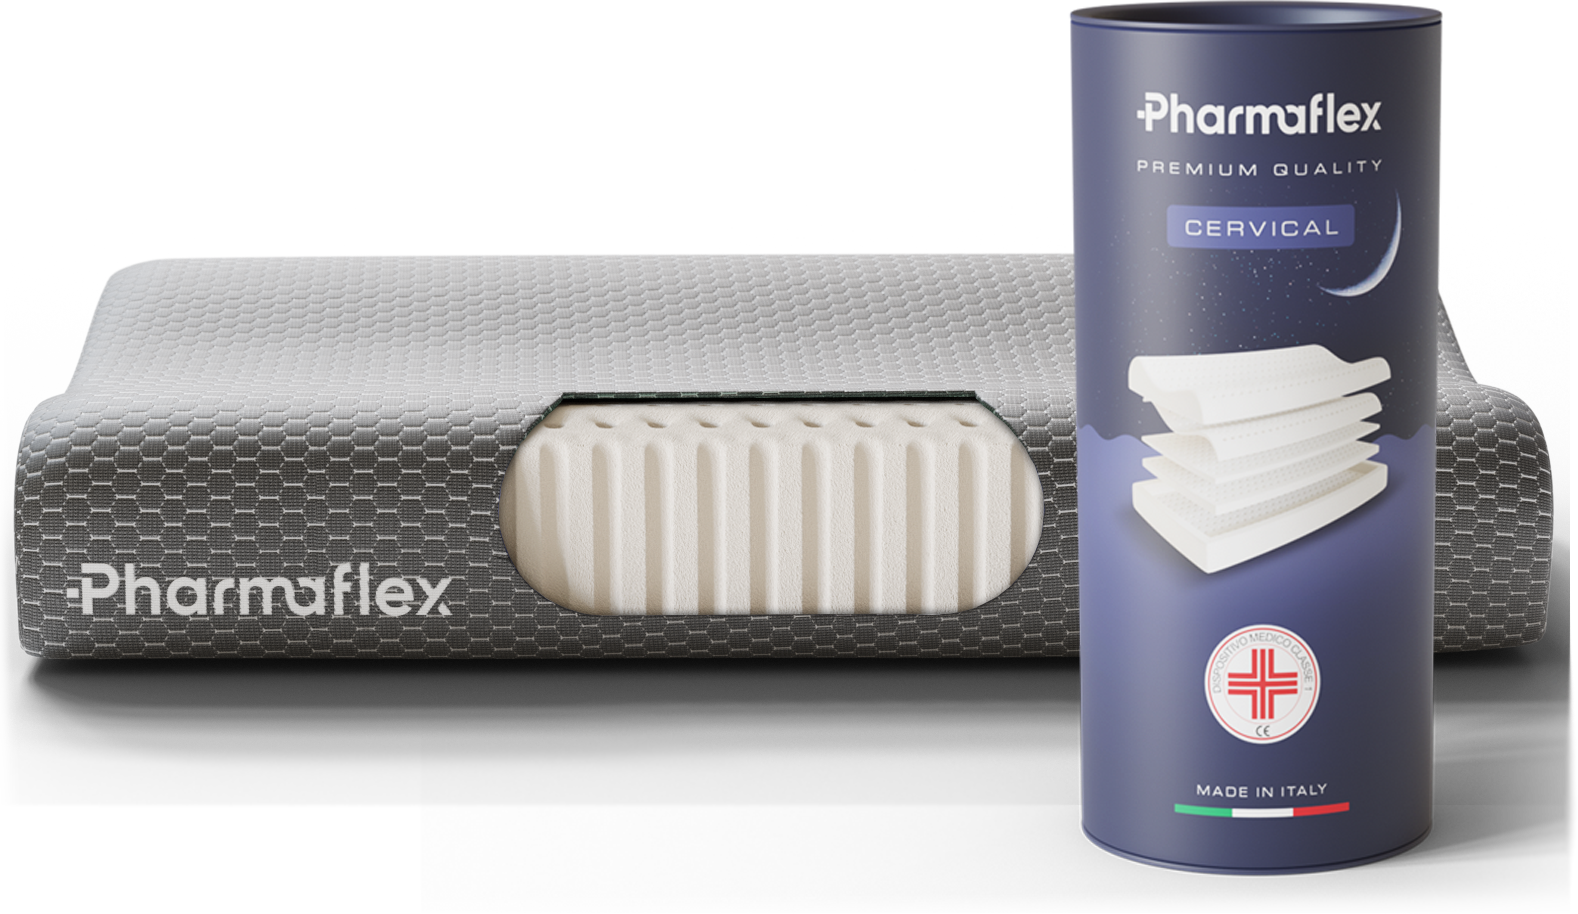 Pharmaflex Cervical, cuscino per la cervicale notturna